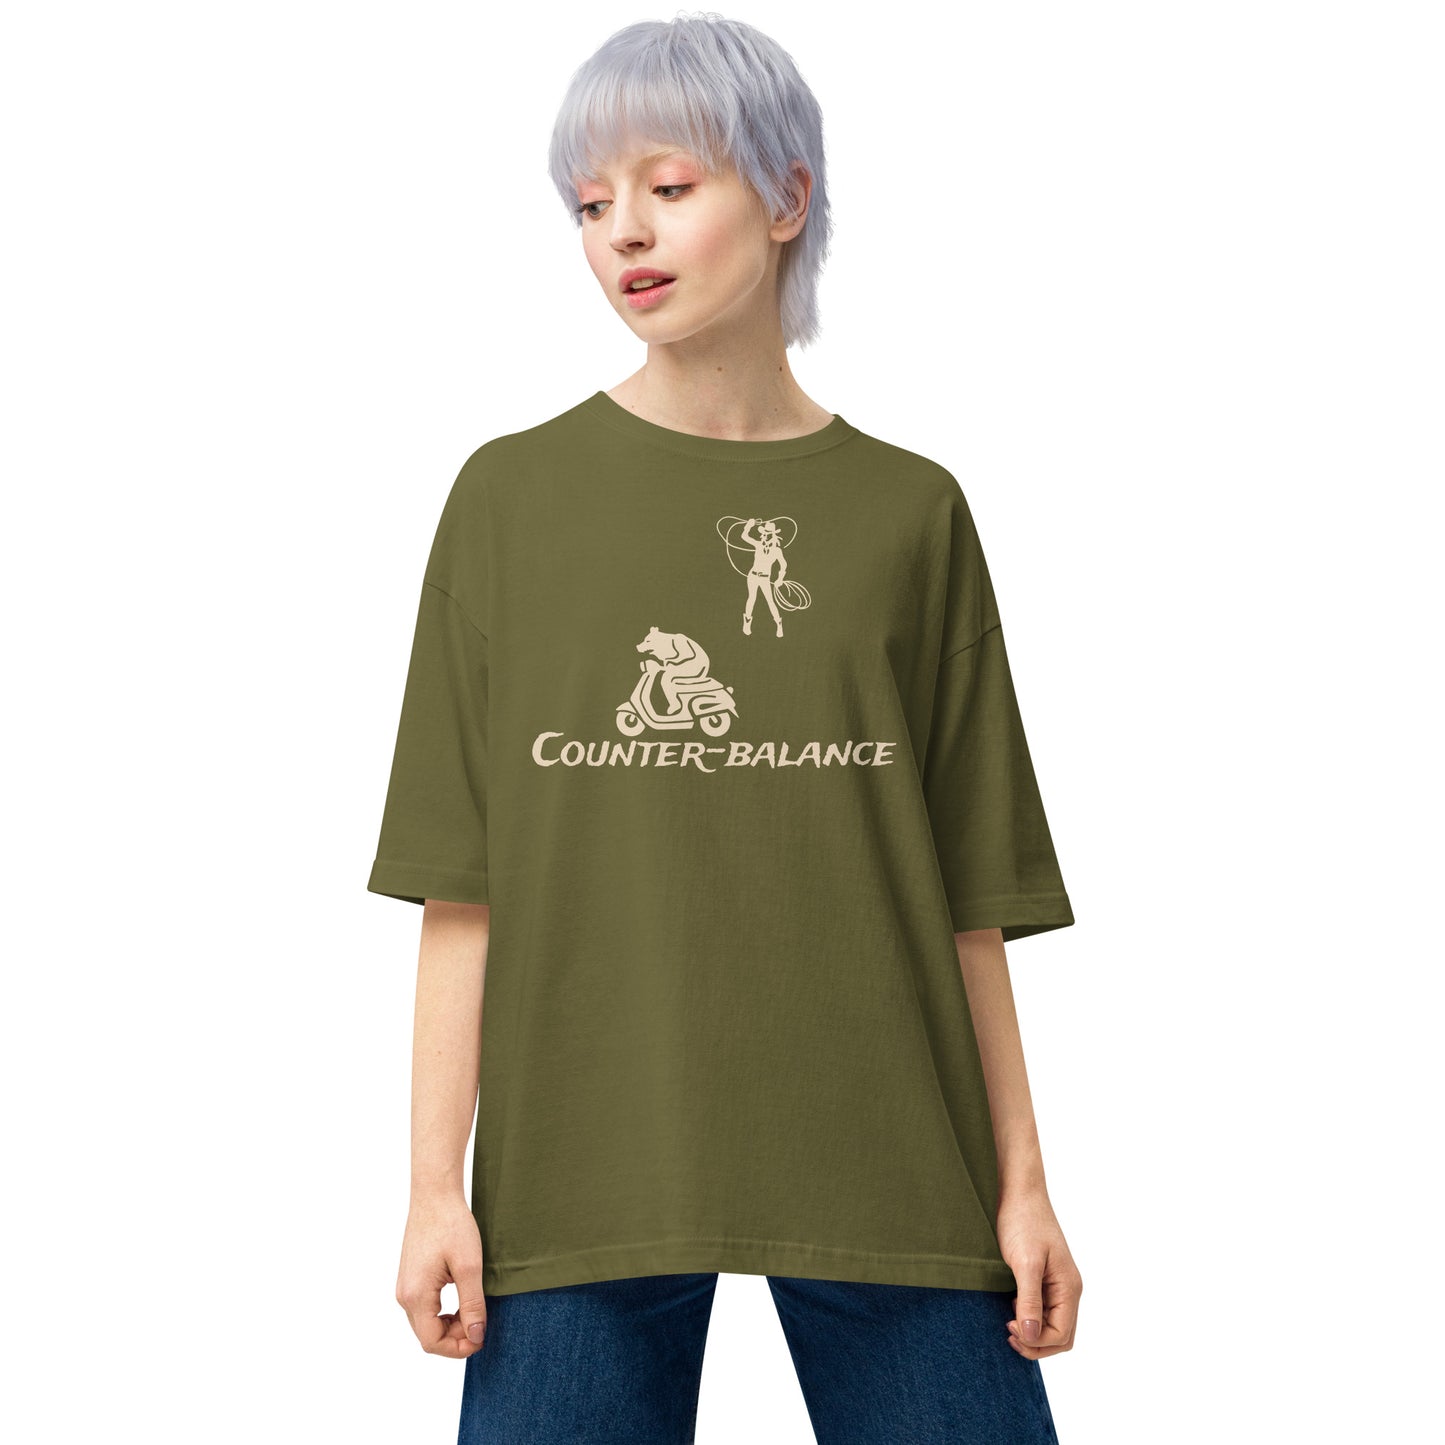 H202 - T-shirt/Oversized (Hunting : Olive)